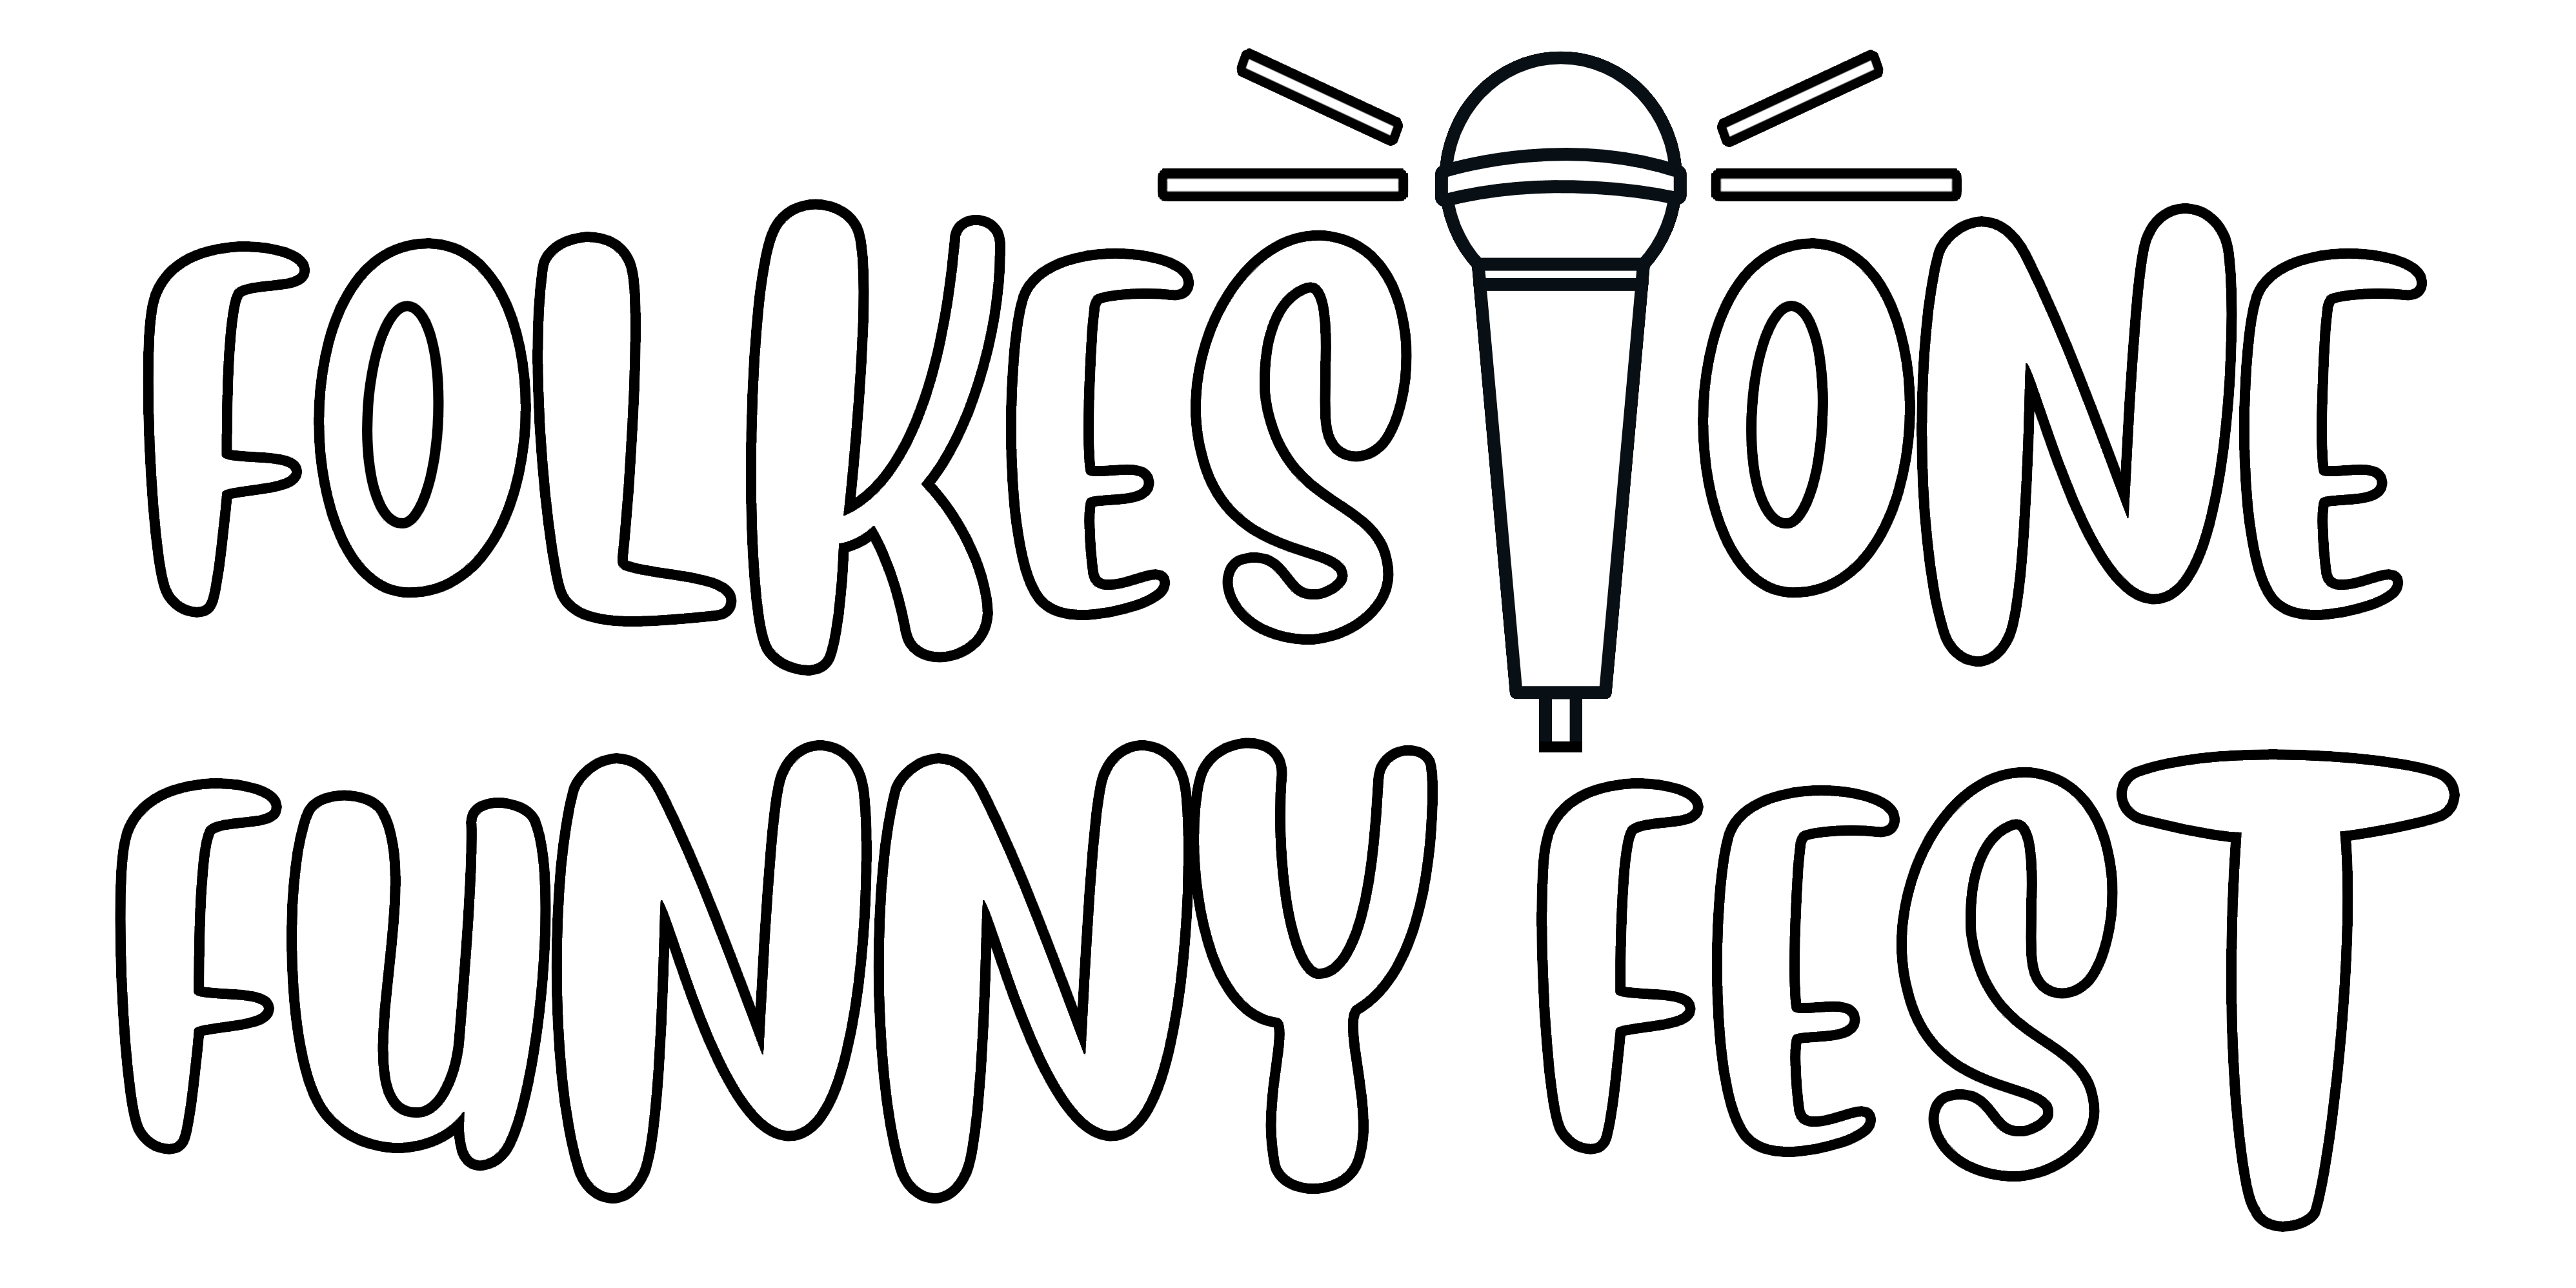 Folkestone Funny Fest